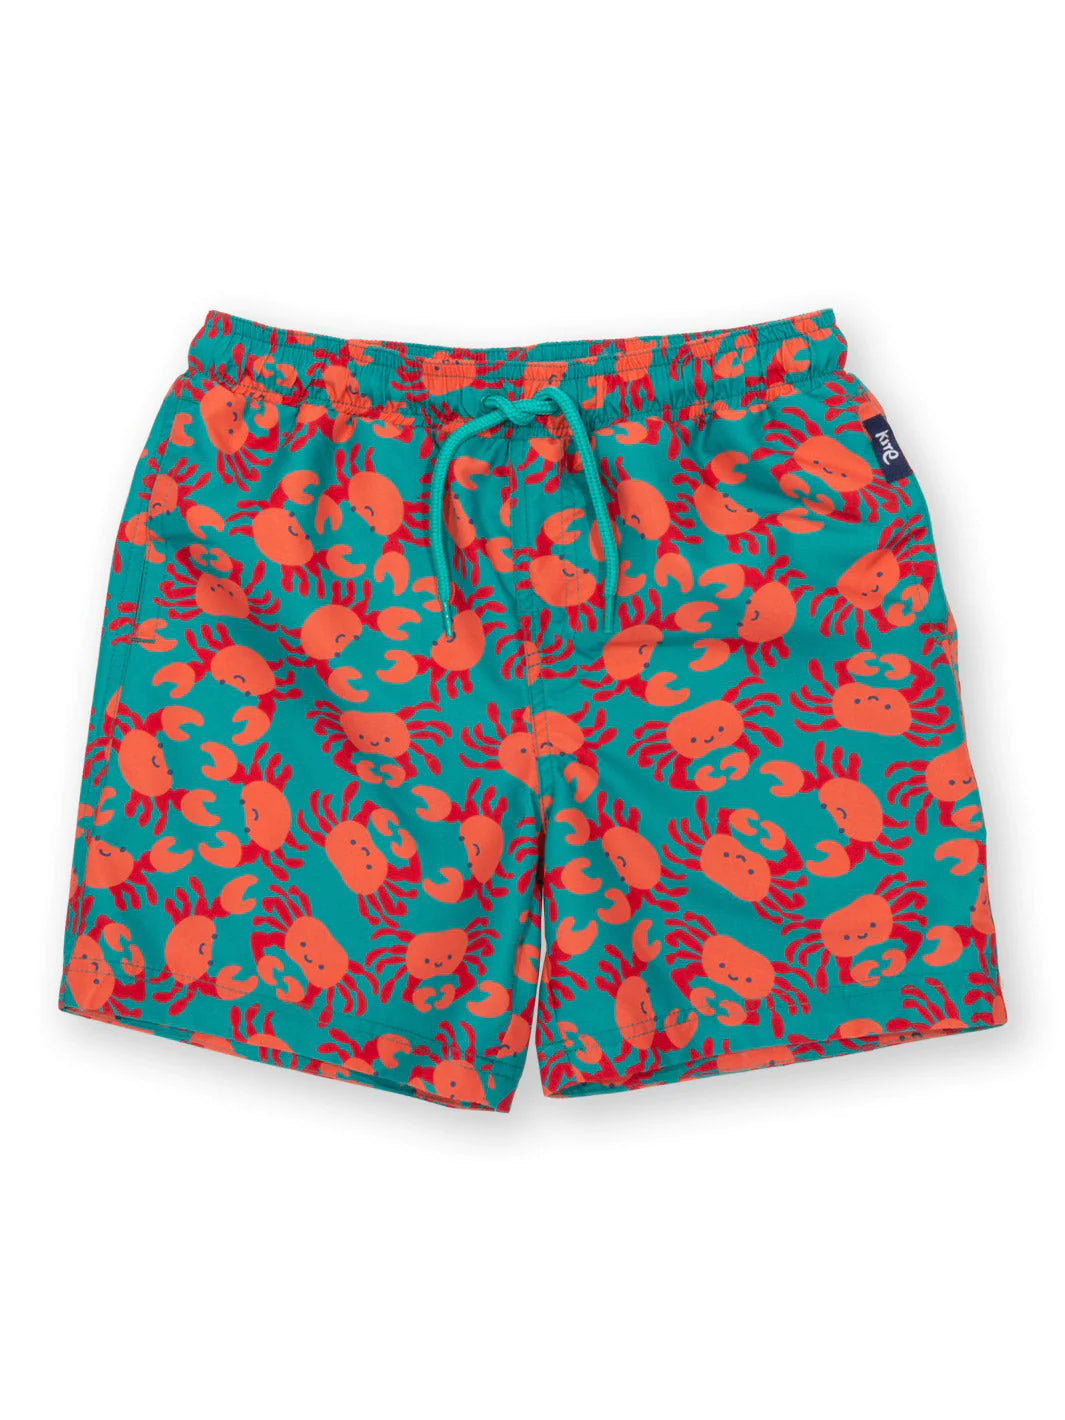 Happy Crab Swim Shorts